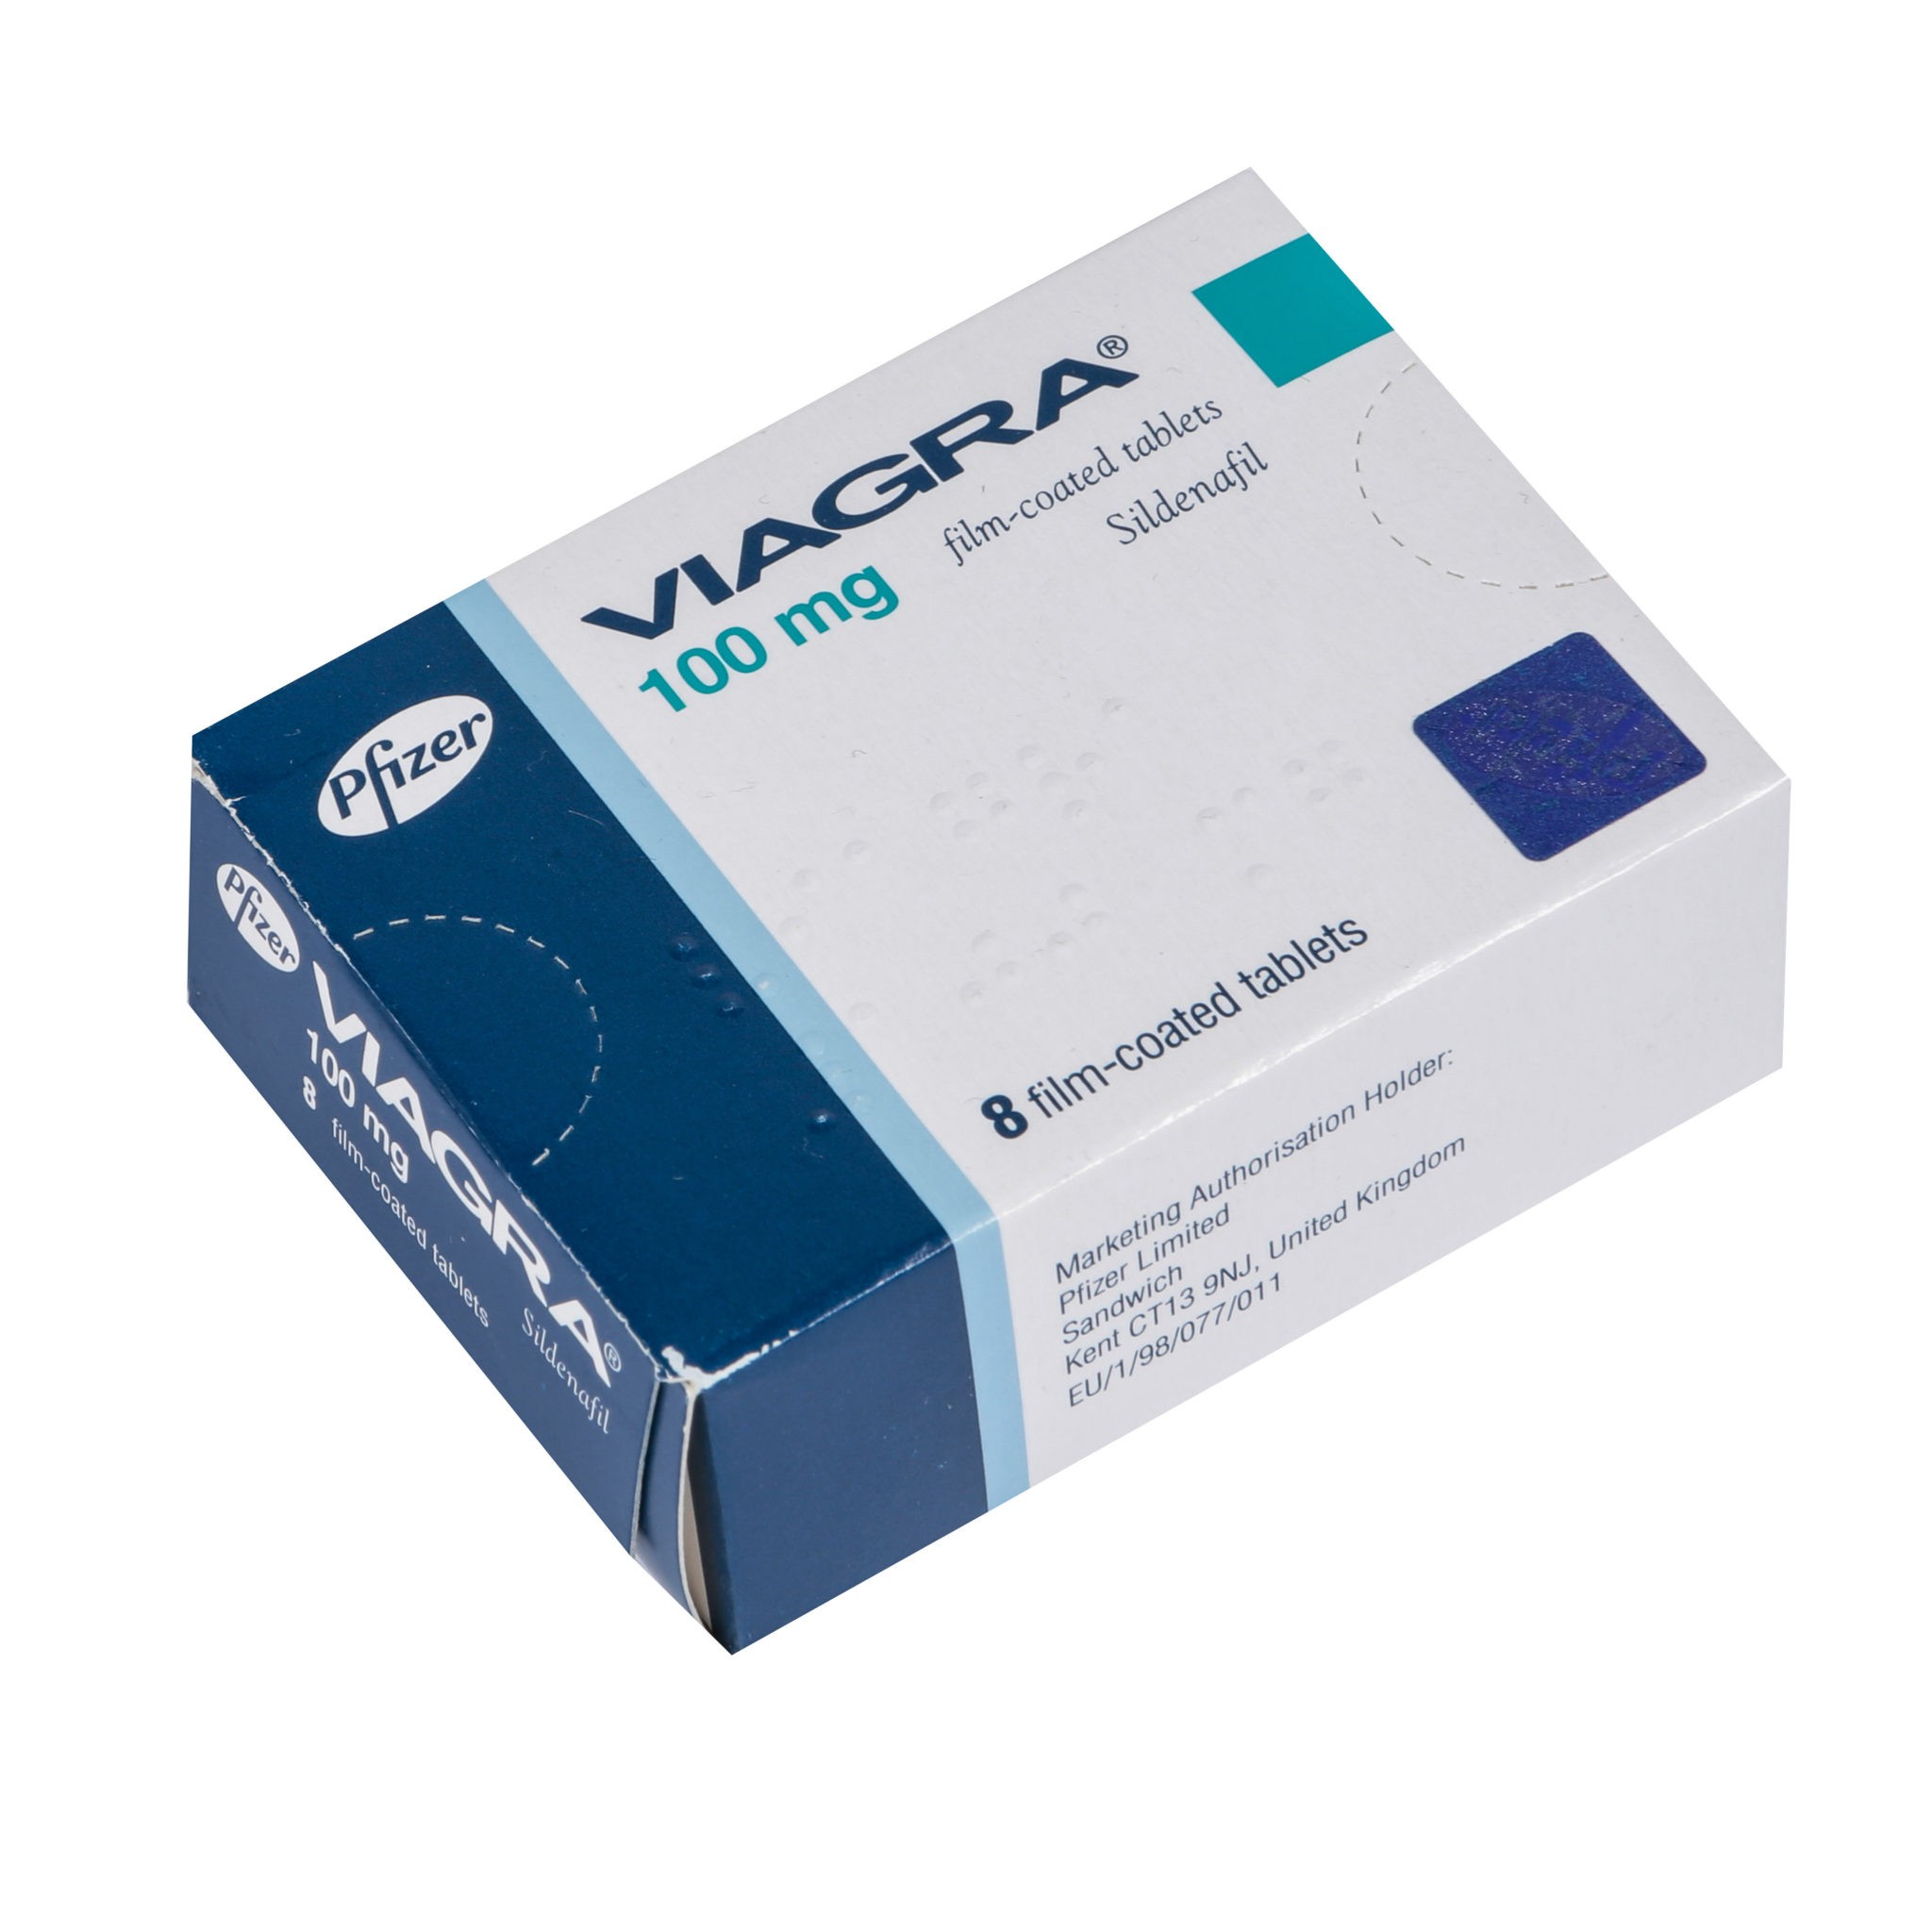 Viagra 100mg Tablets (8 Tablets)